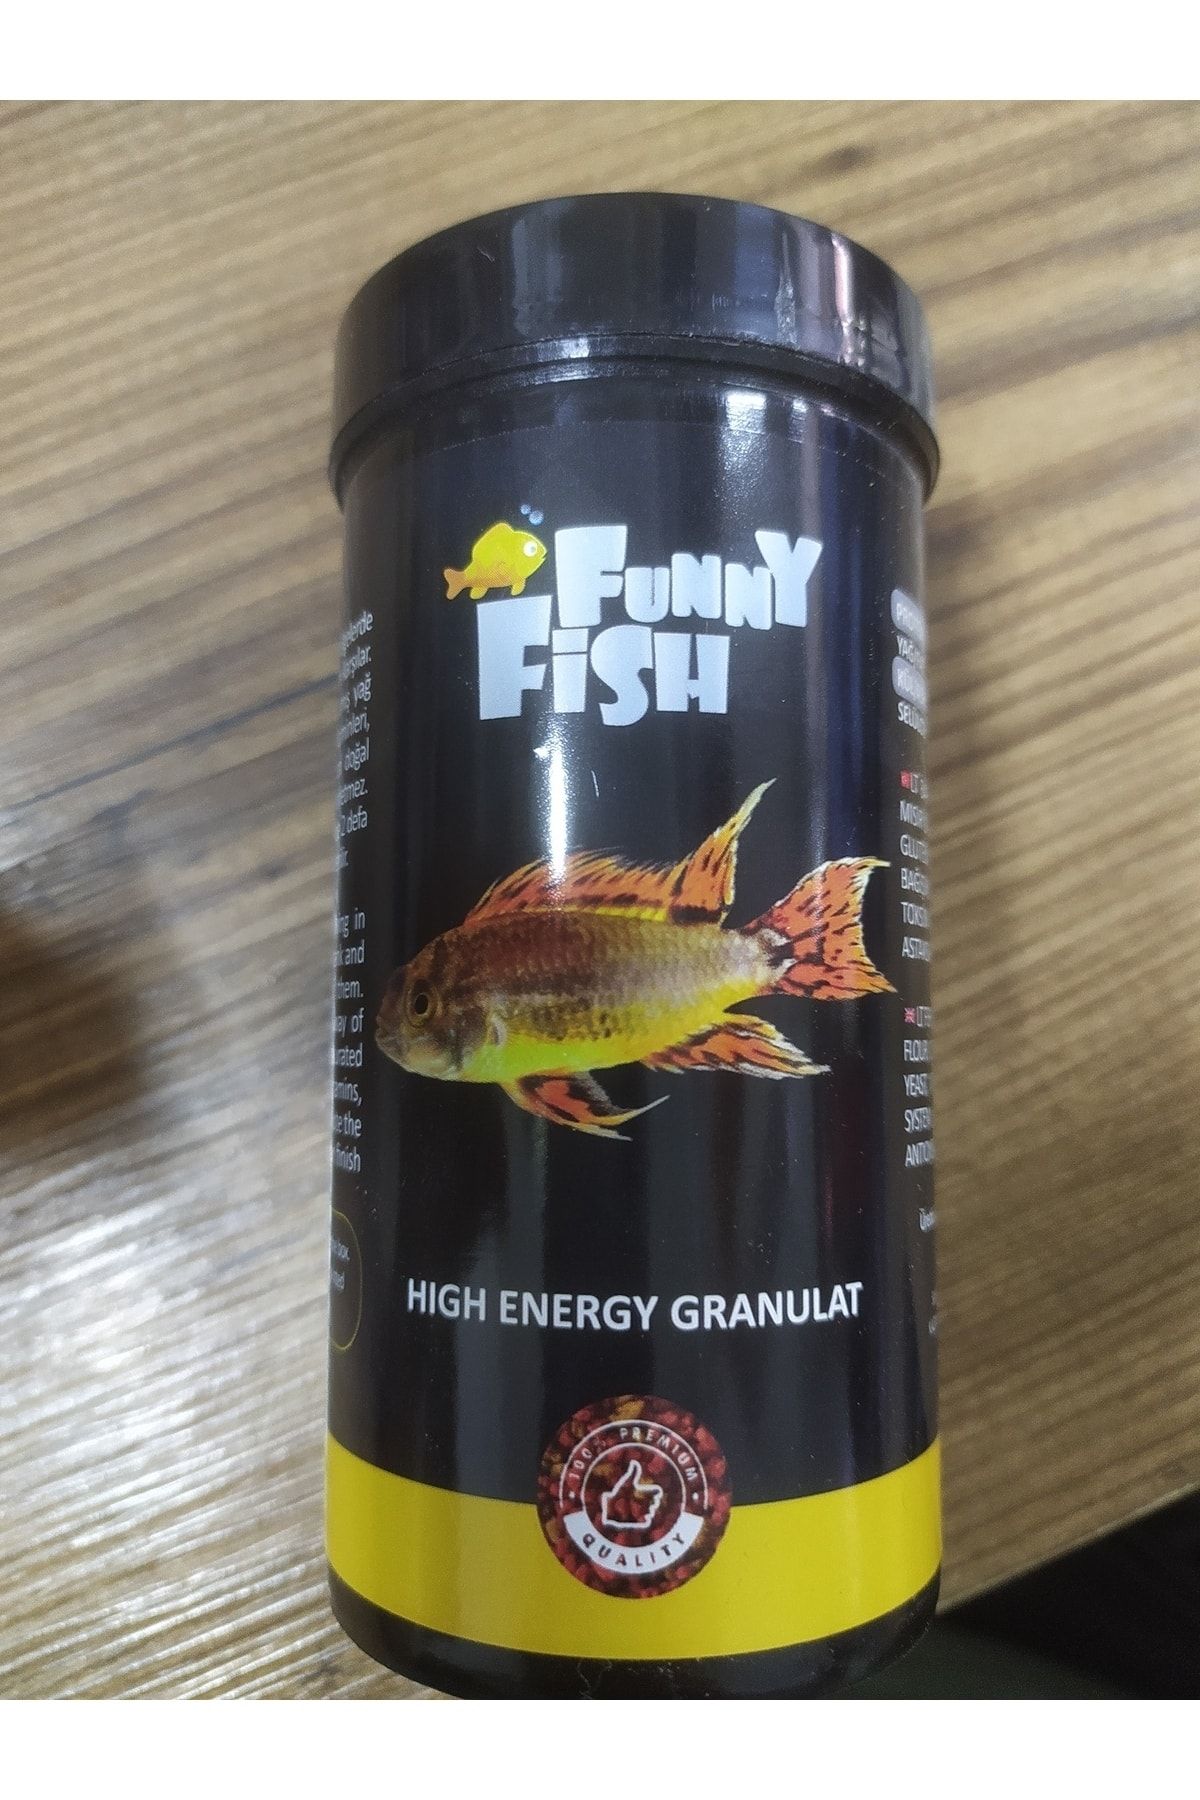 Funny fish Hıgh Energy Granulat